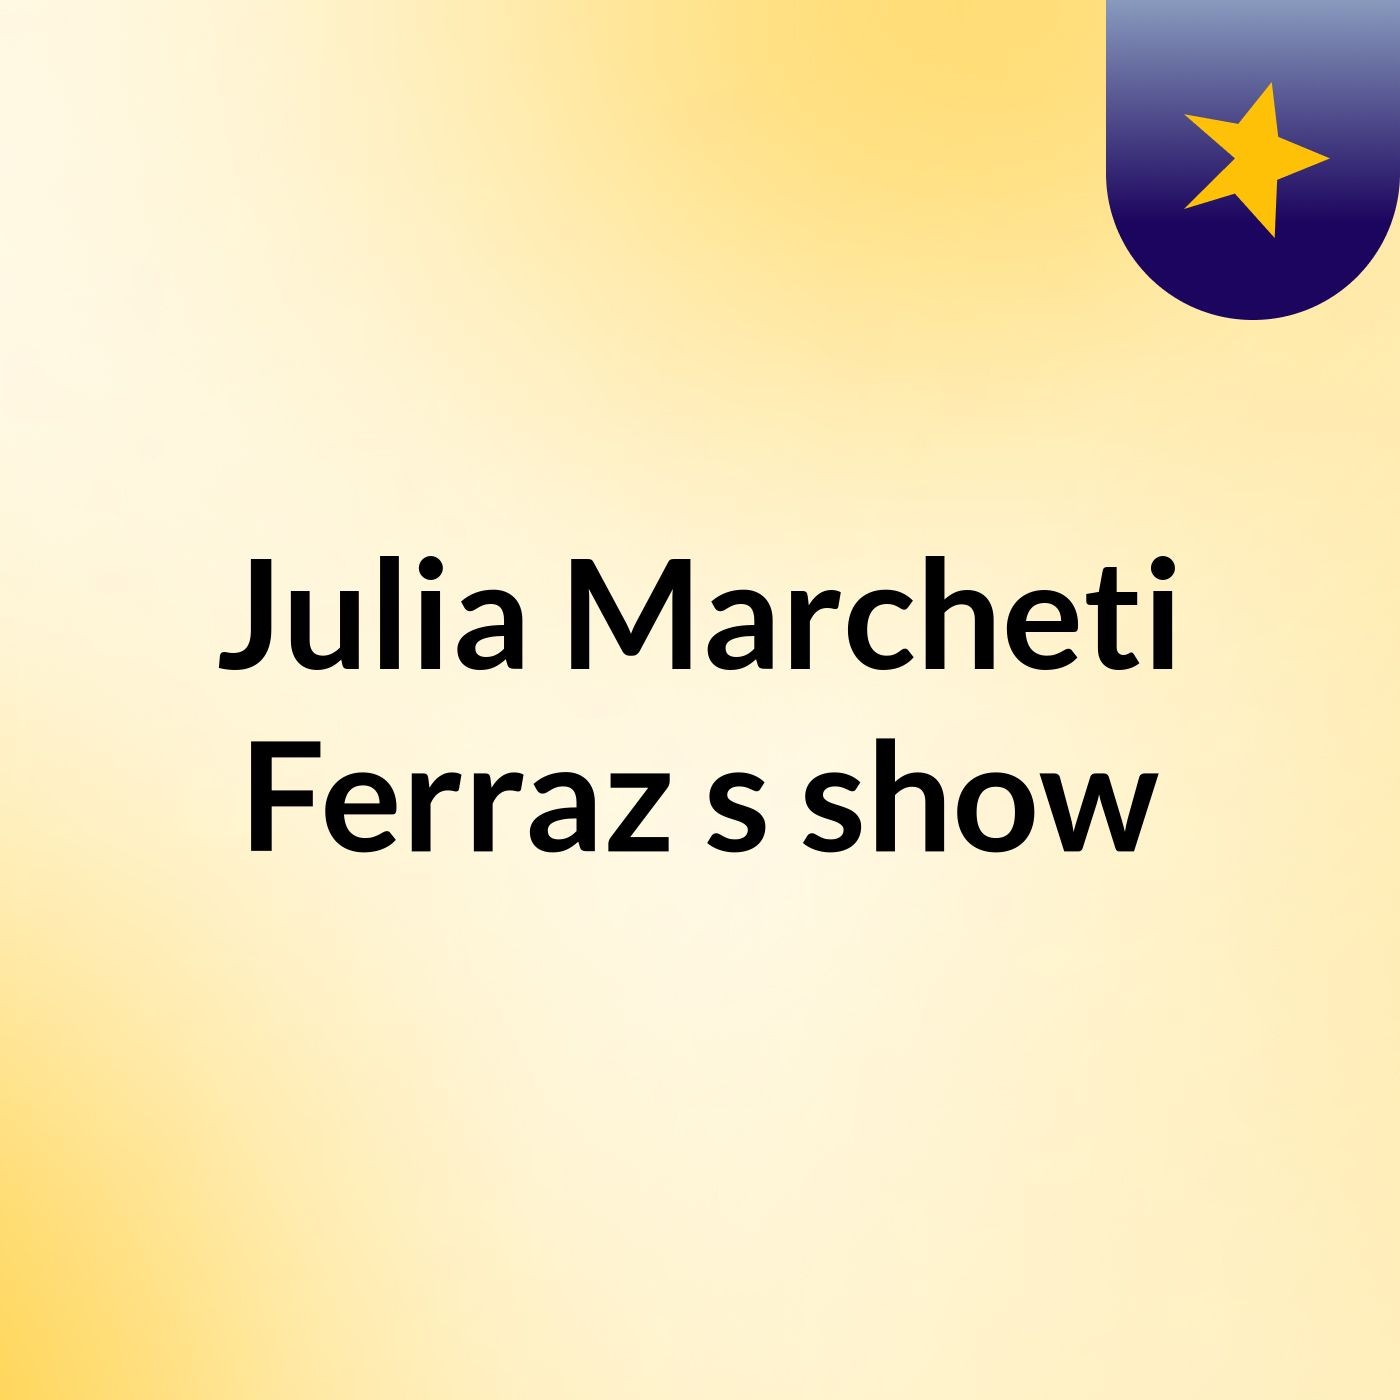 Julia Marcheti Ferraz's show